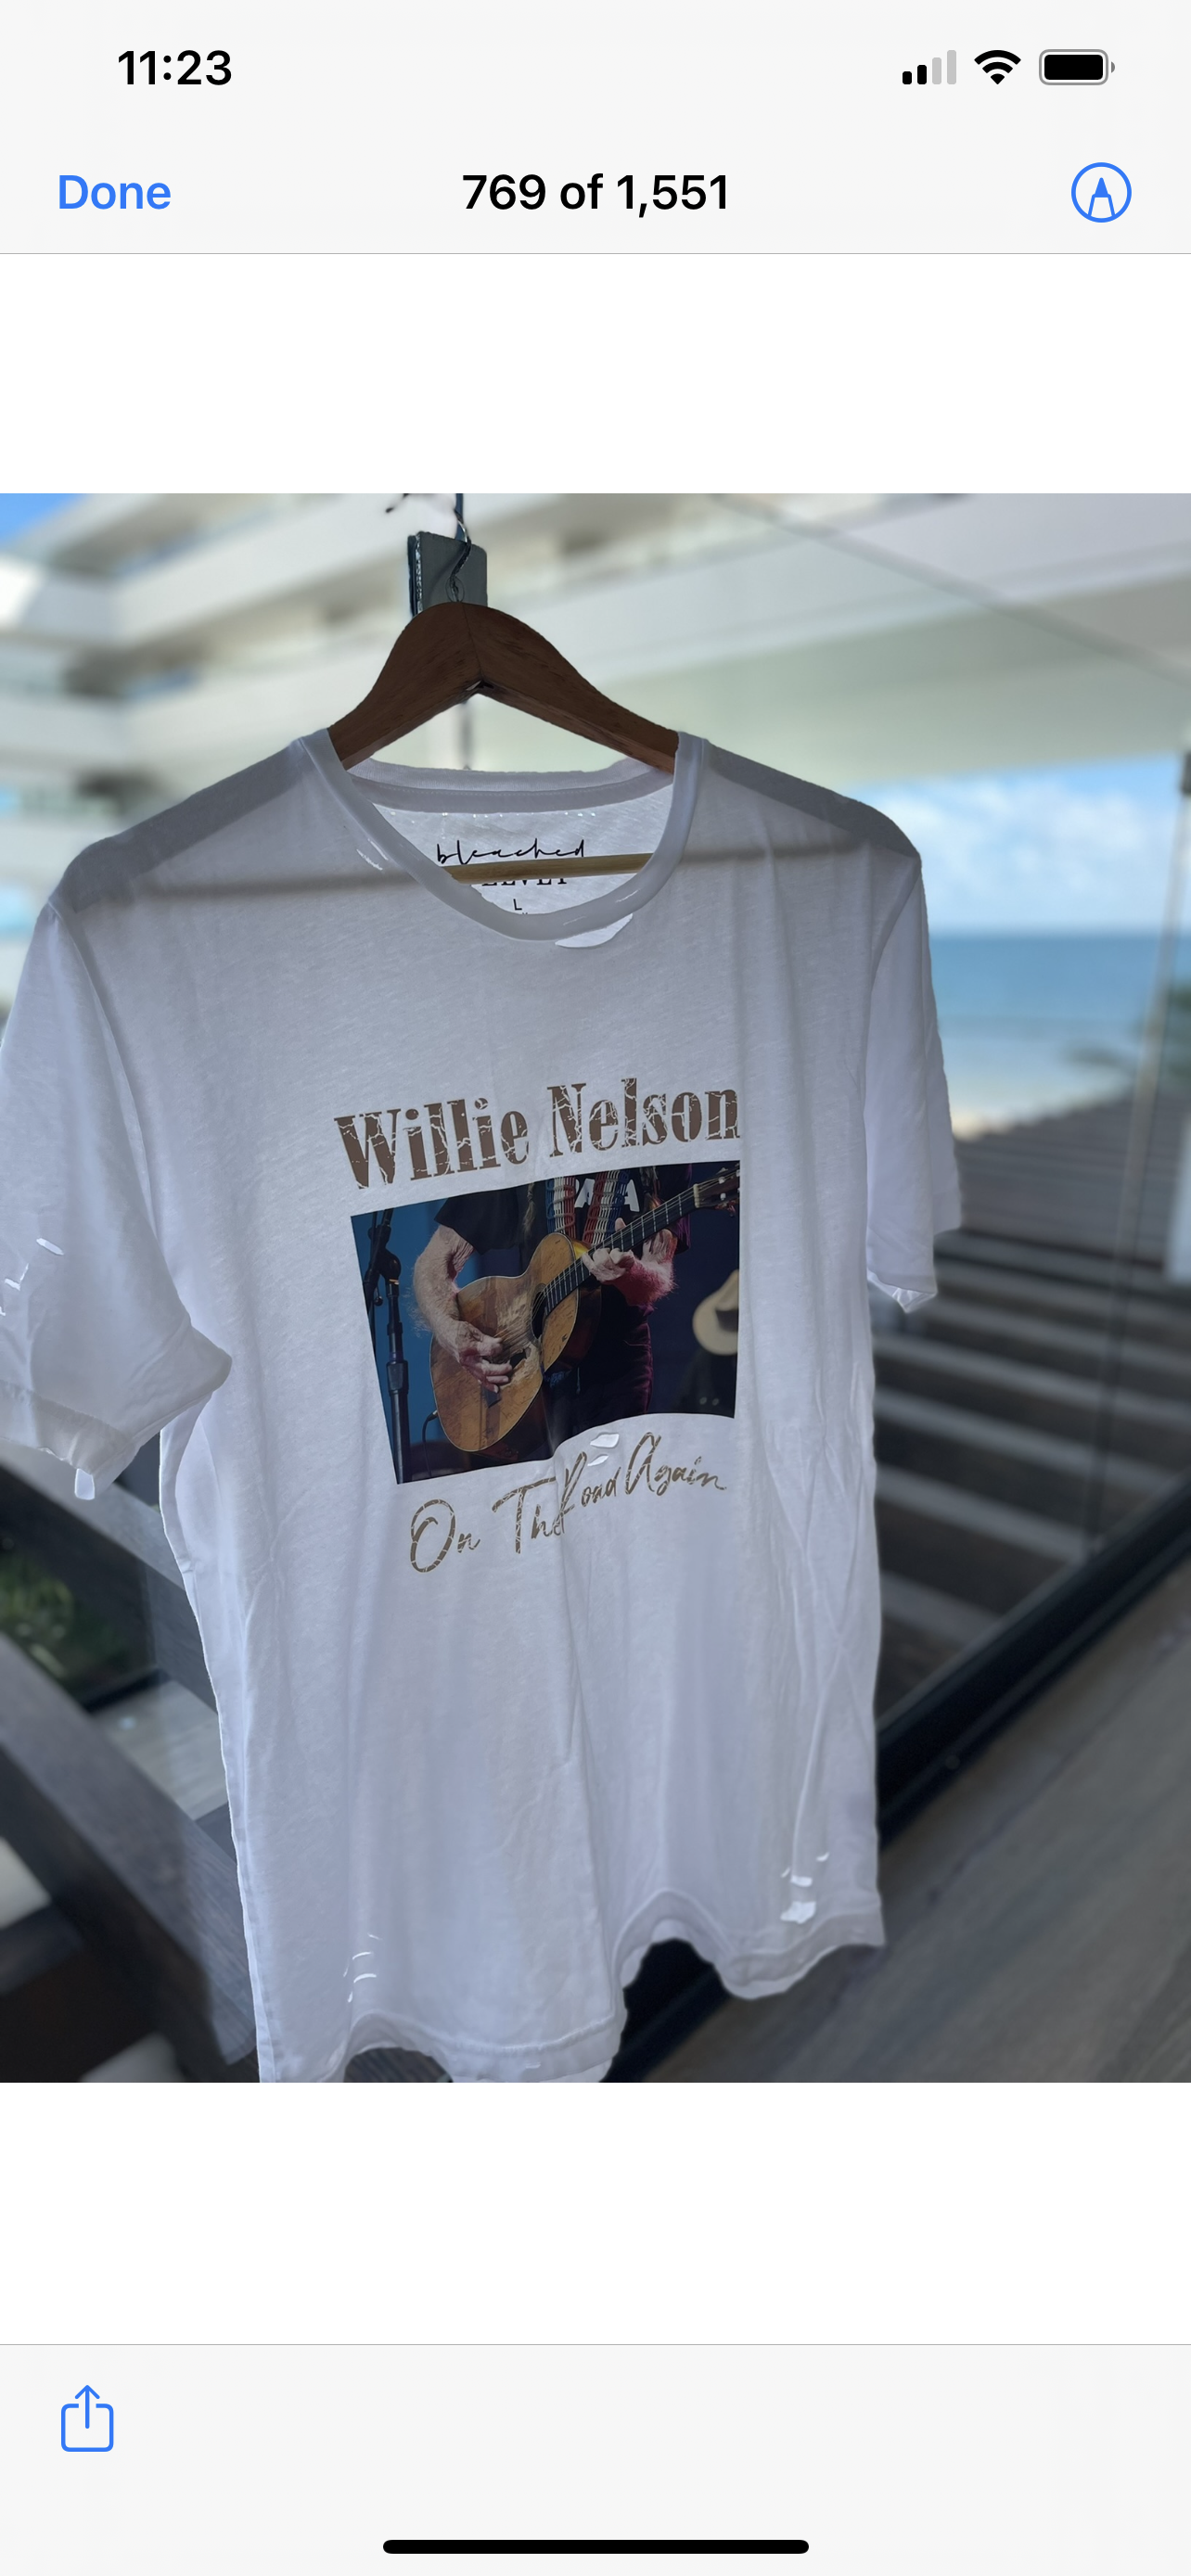 Game Changer Crew Tee - Willie Nelson C